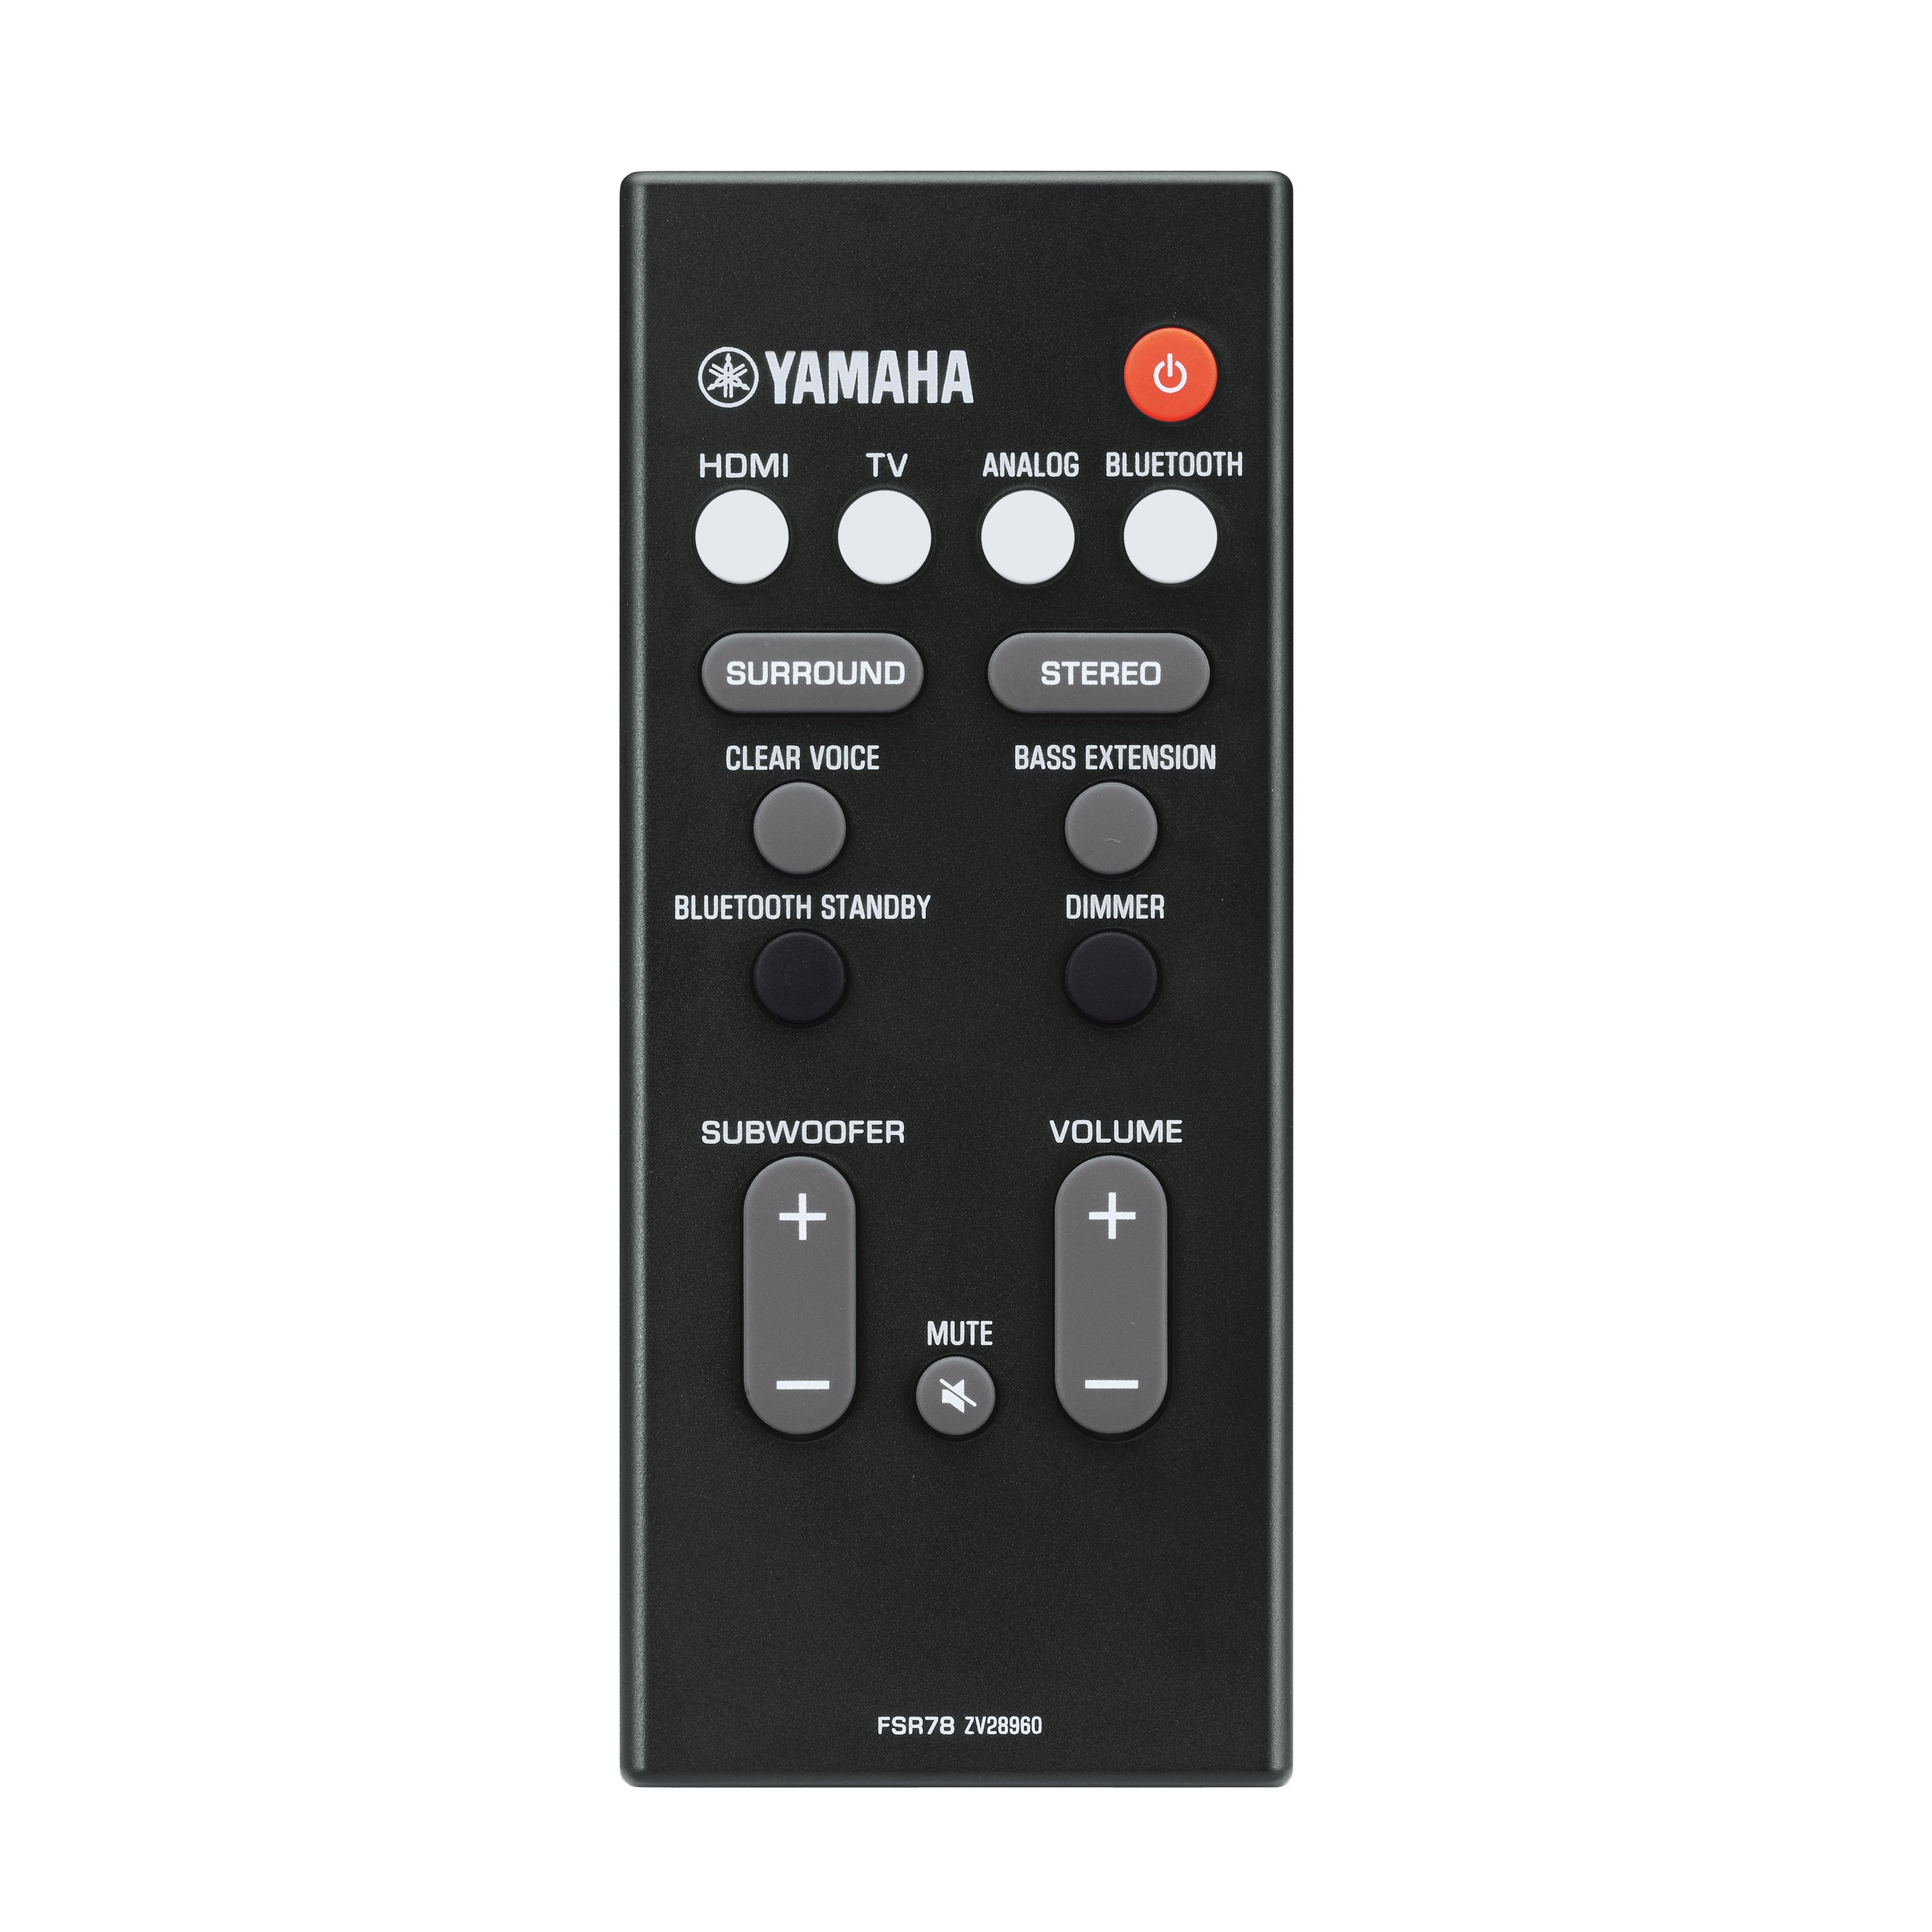 YAS-207 - Specs - Sound Bars - Audio & Visual - Products - Yamaha 